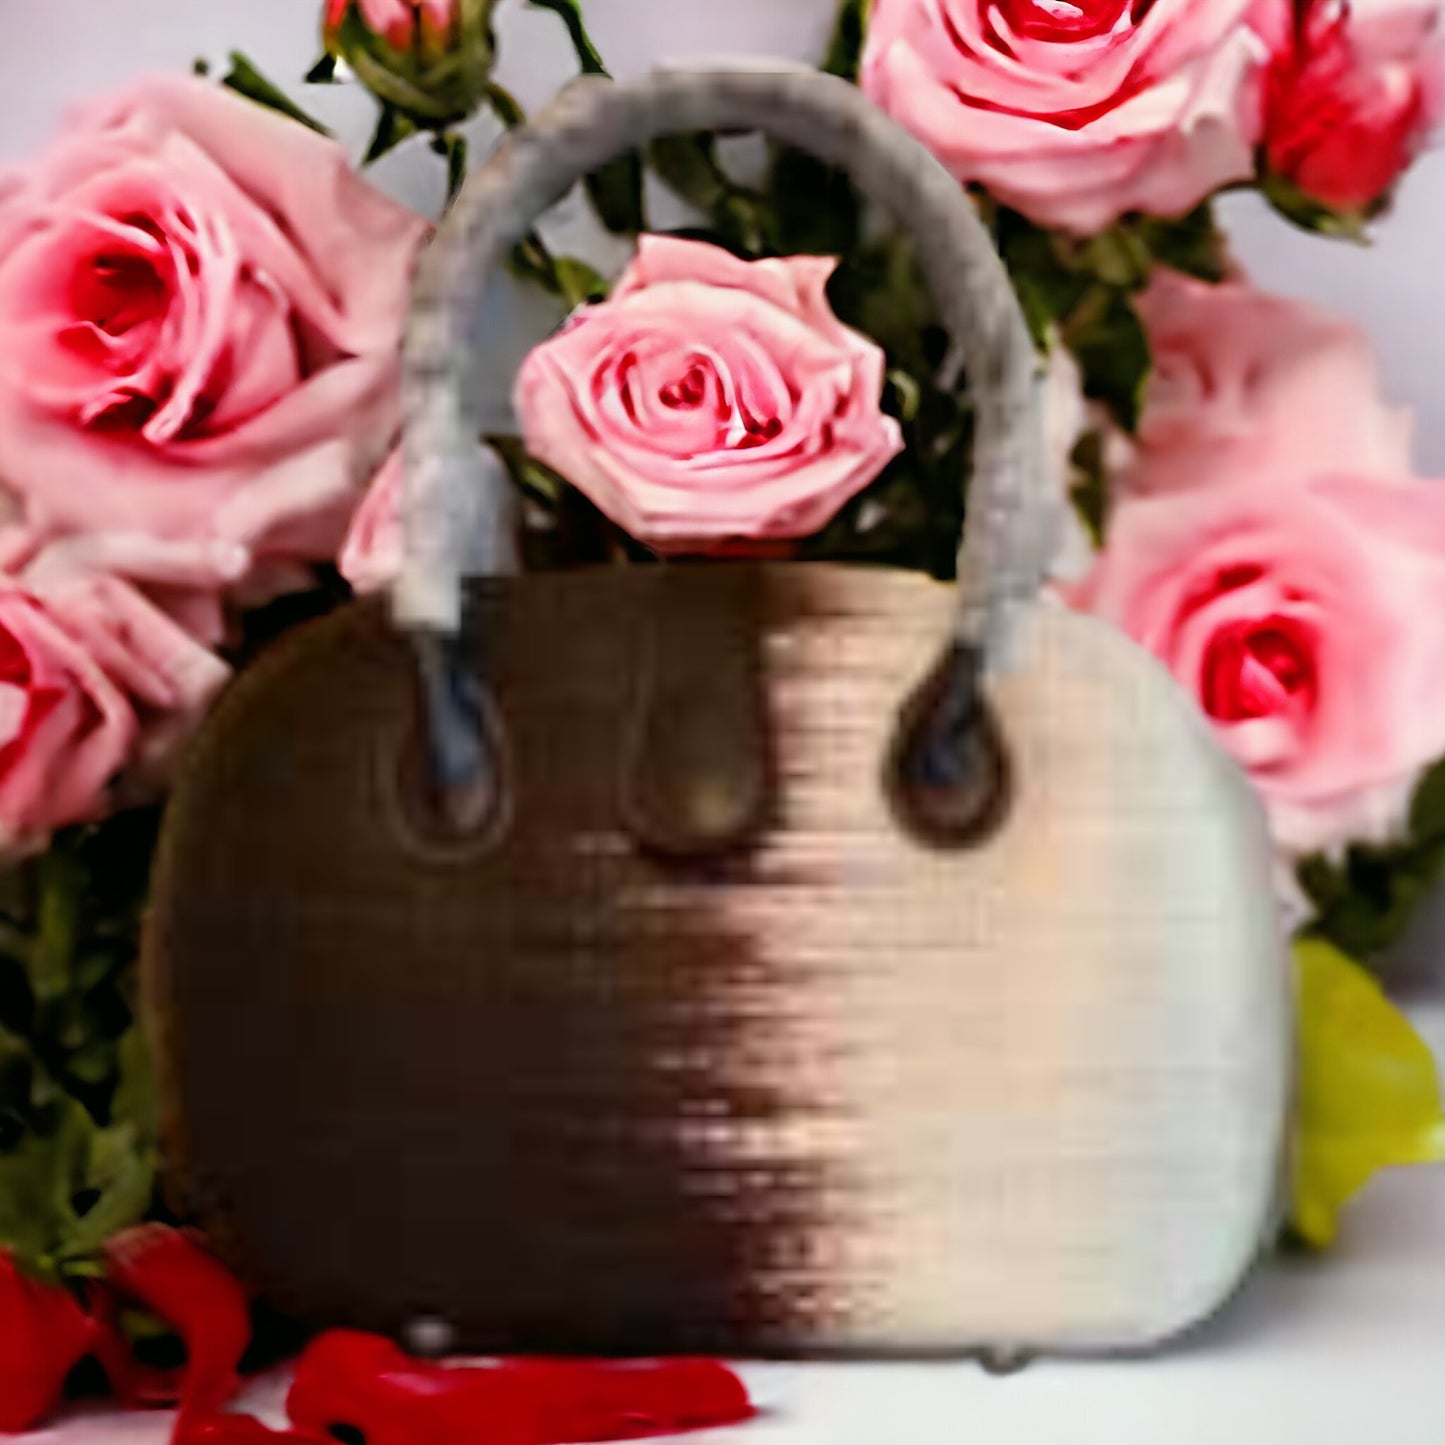 Handmade Buri handbag